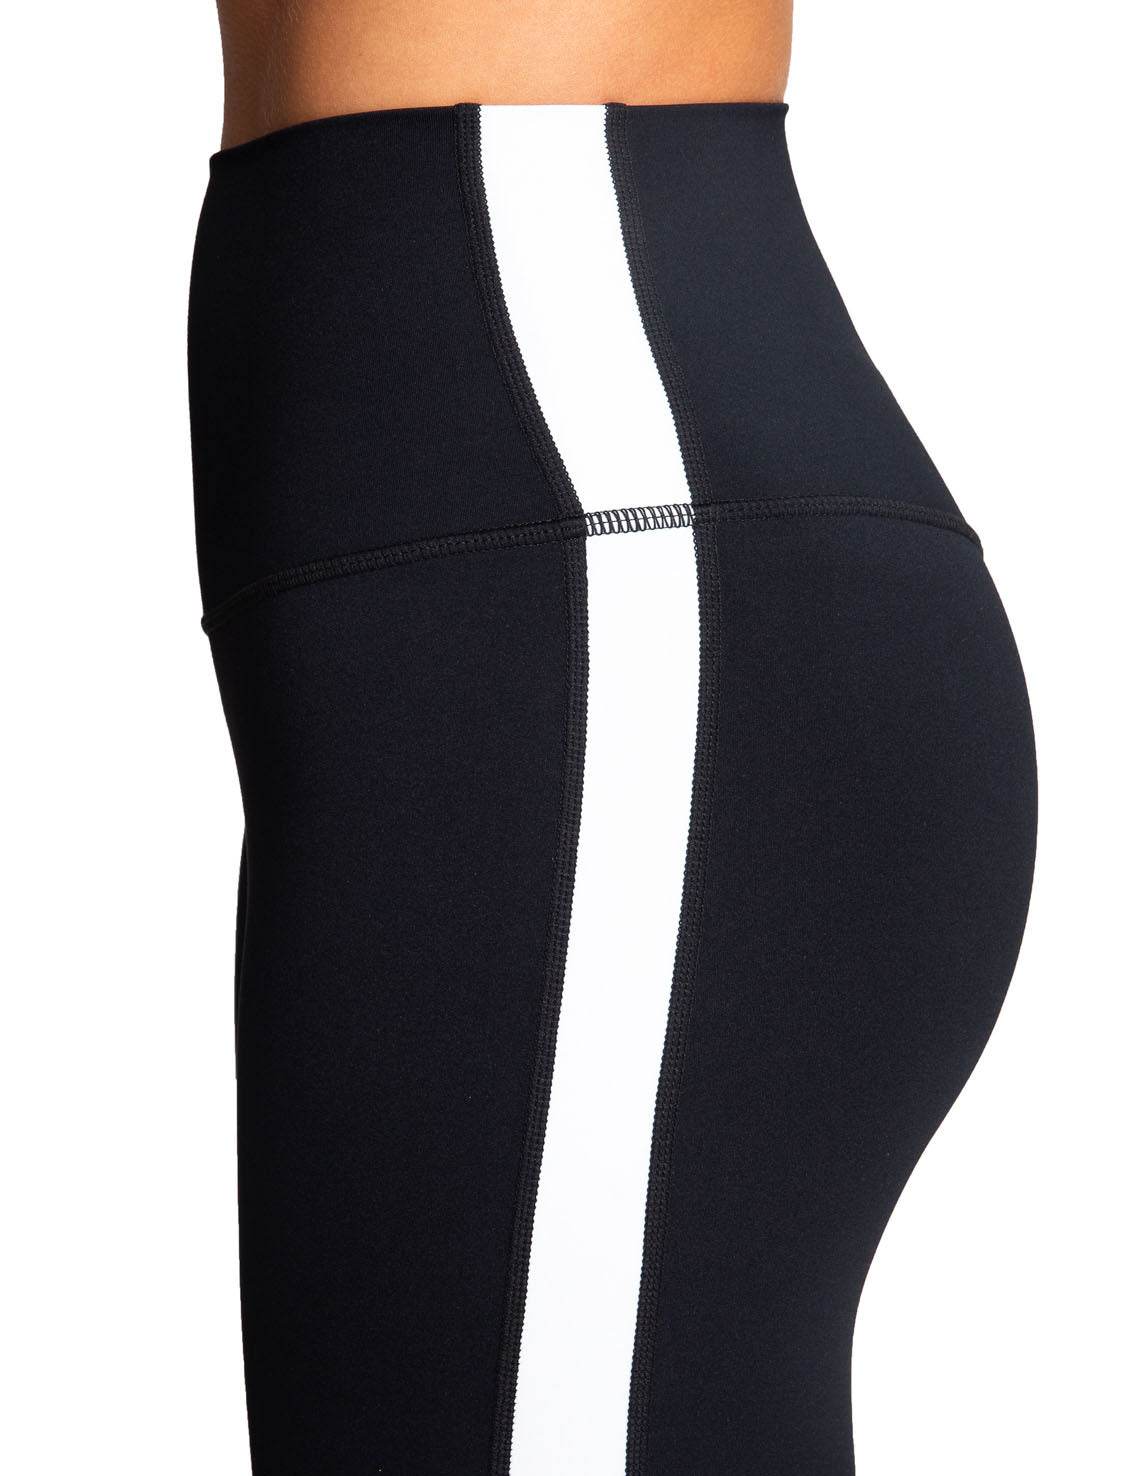 Power High-Waist Leggings with Stripes, Black/White - Delfin Brands